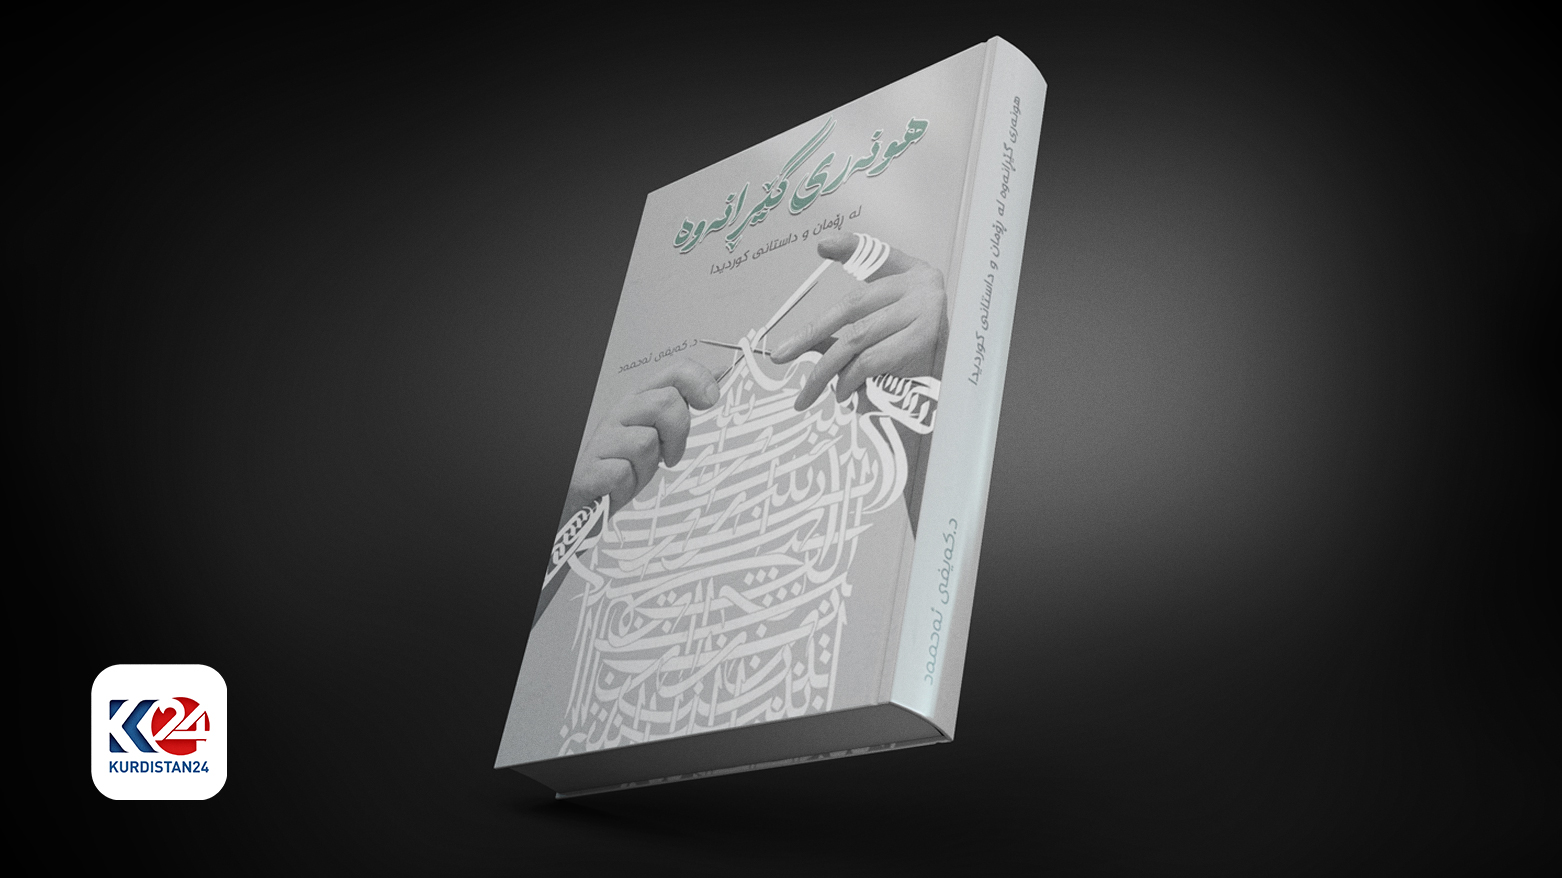 Keyfi Ahmads latest book explores Kurdish narrative in novels and stories